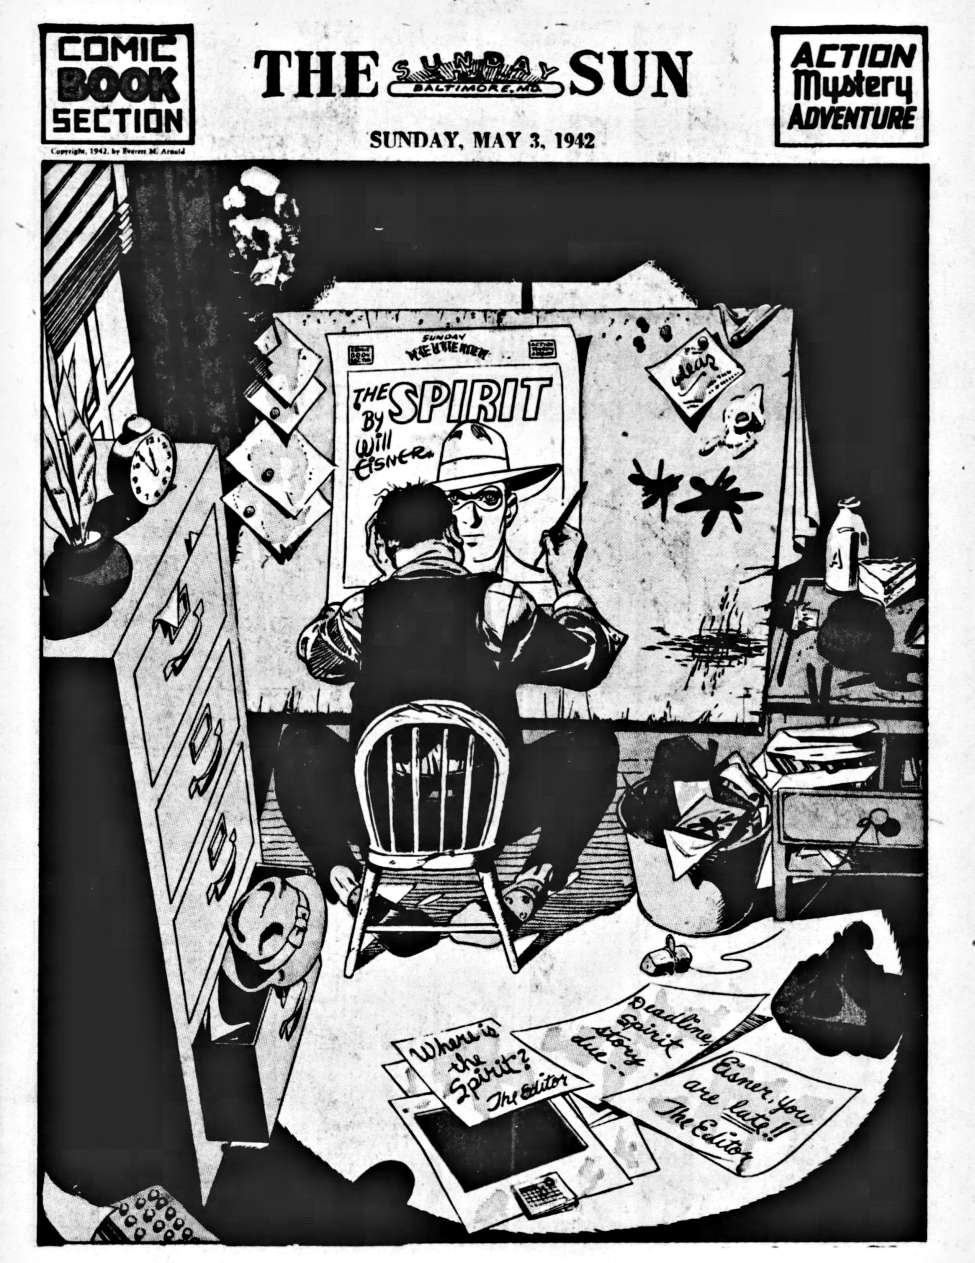 Comic Book Cover For The Spirit (1942-05-03) - Baltimore Sun (b/w)